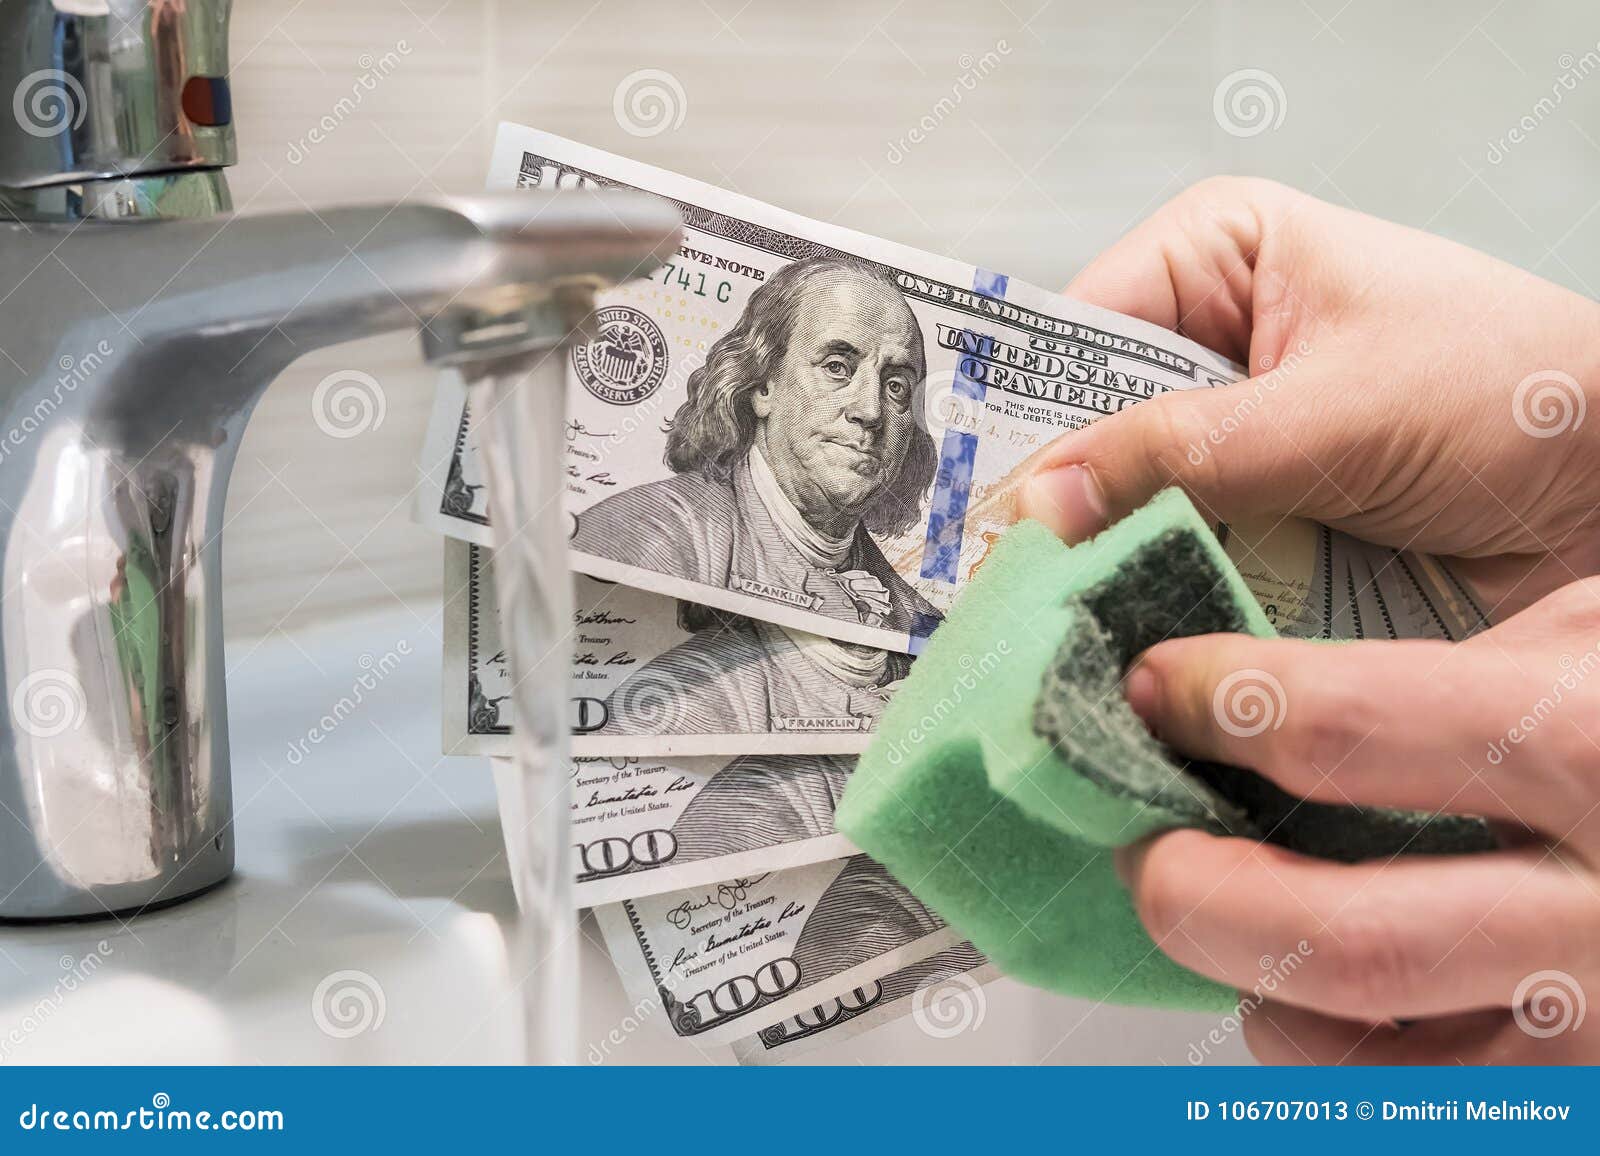 money laundering, concept.